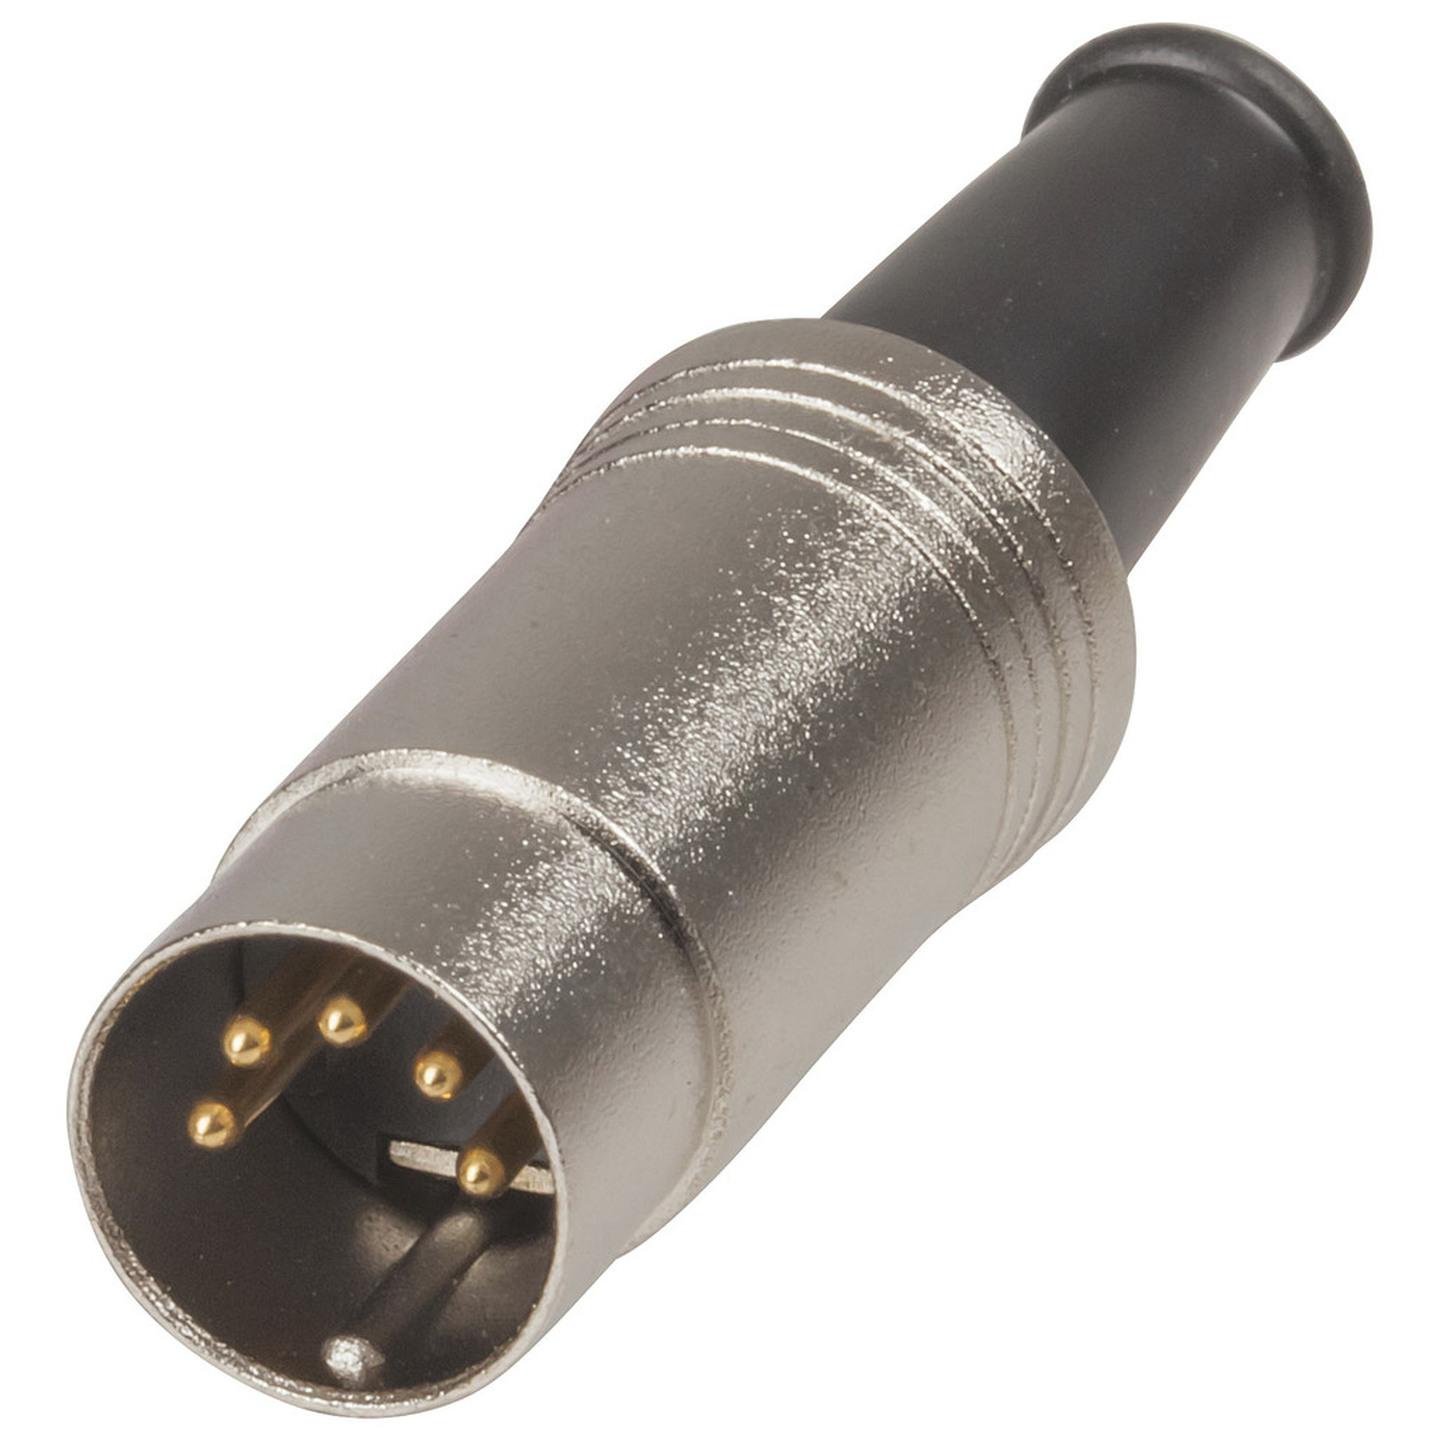 5 Pin DIN Plug - Metal Case